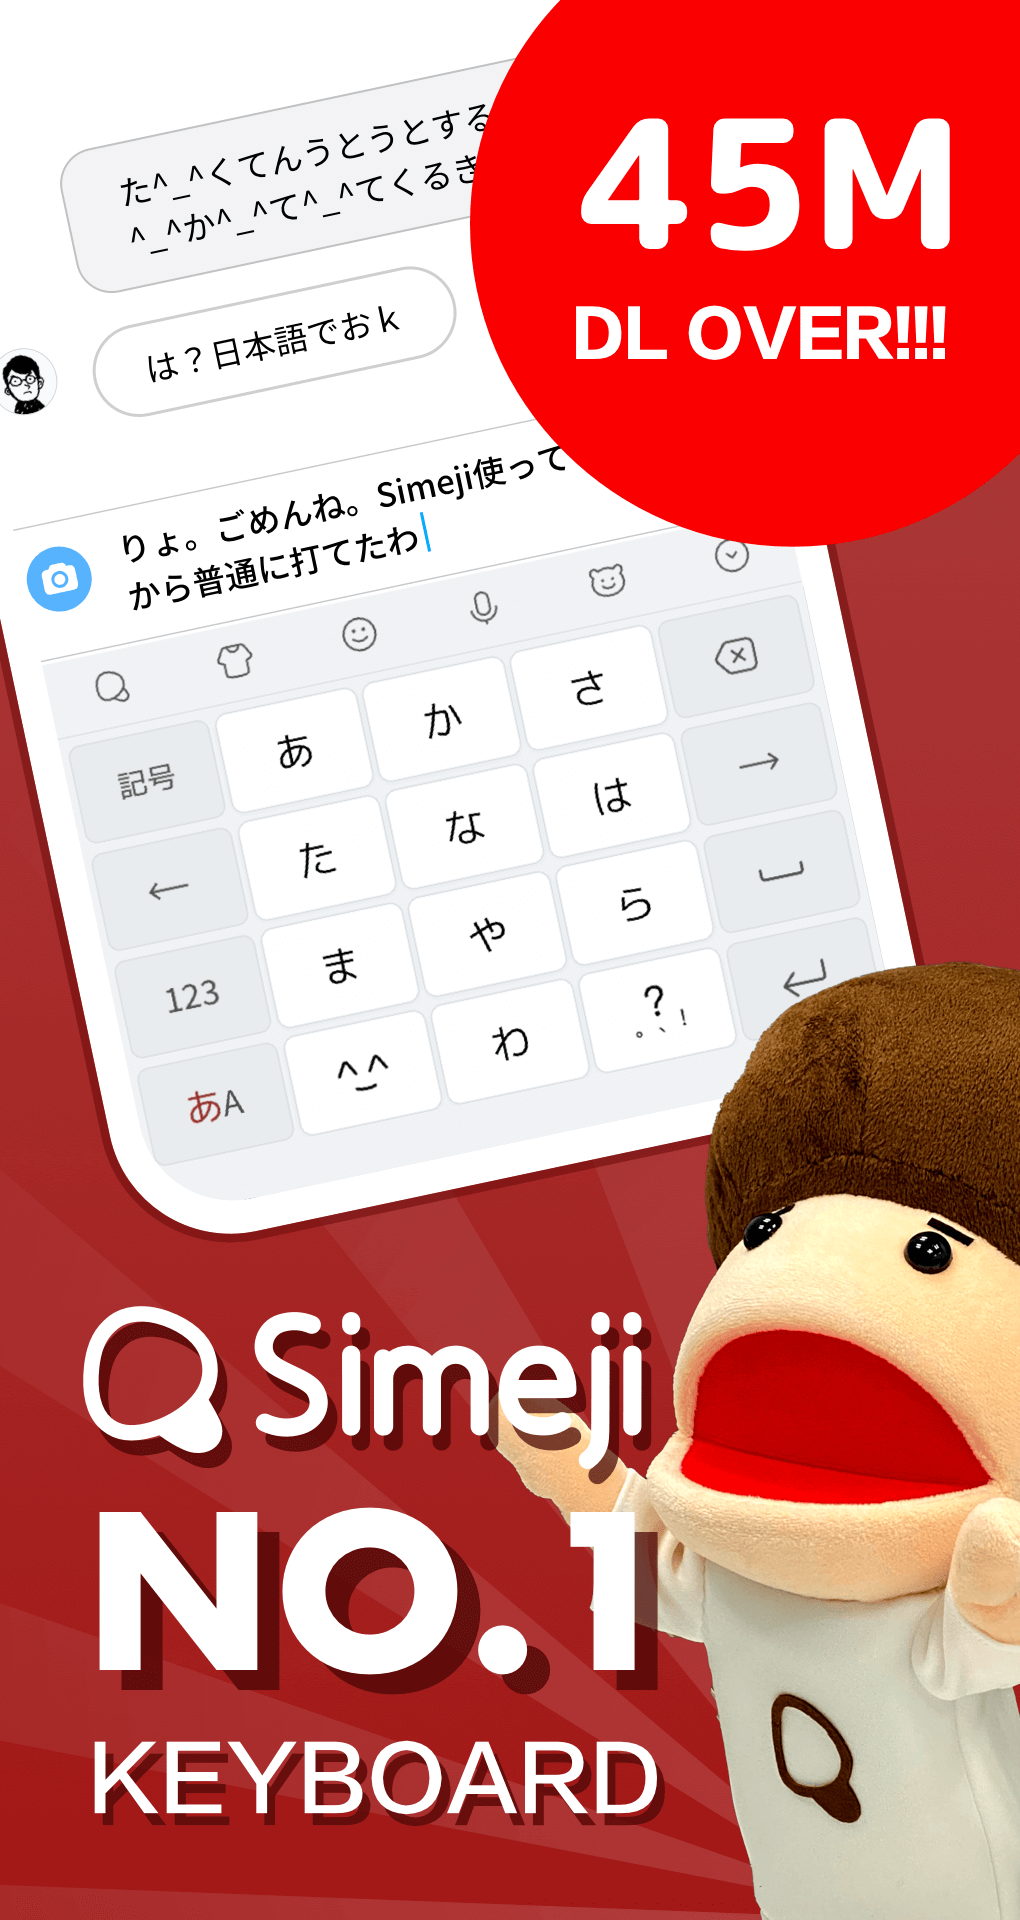 Simeji Japanese Keyboard Emoji Apk 17 5 For Android Download Simeji Japanese Keyboard Emoji Xapk Apk Bundle Latest Version From Apkfab Com